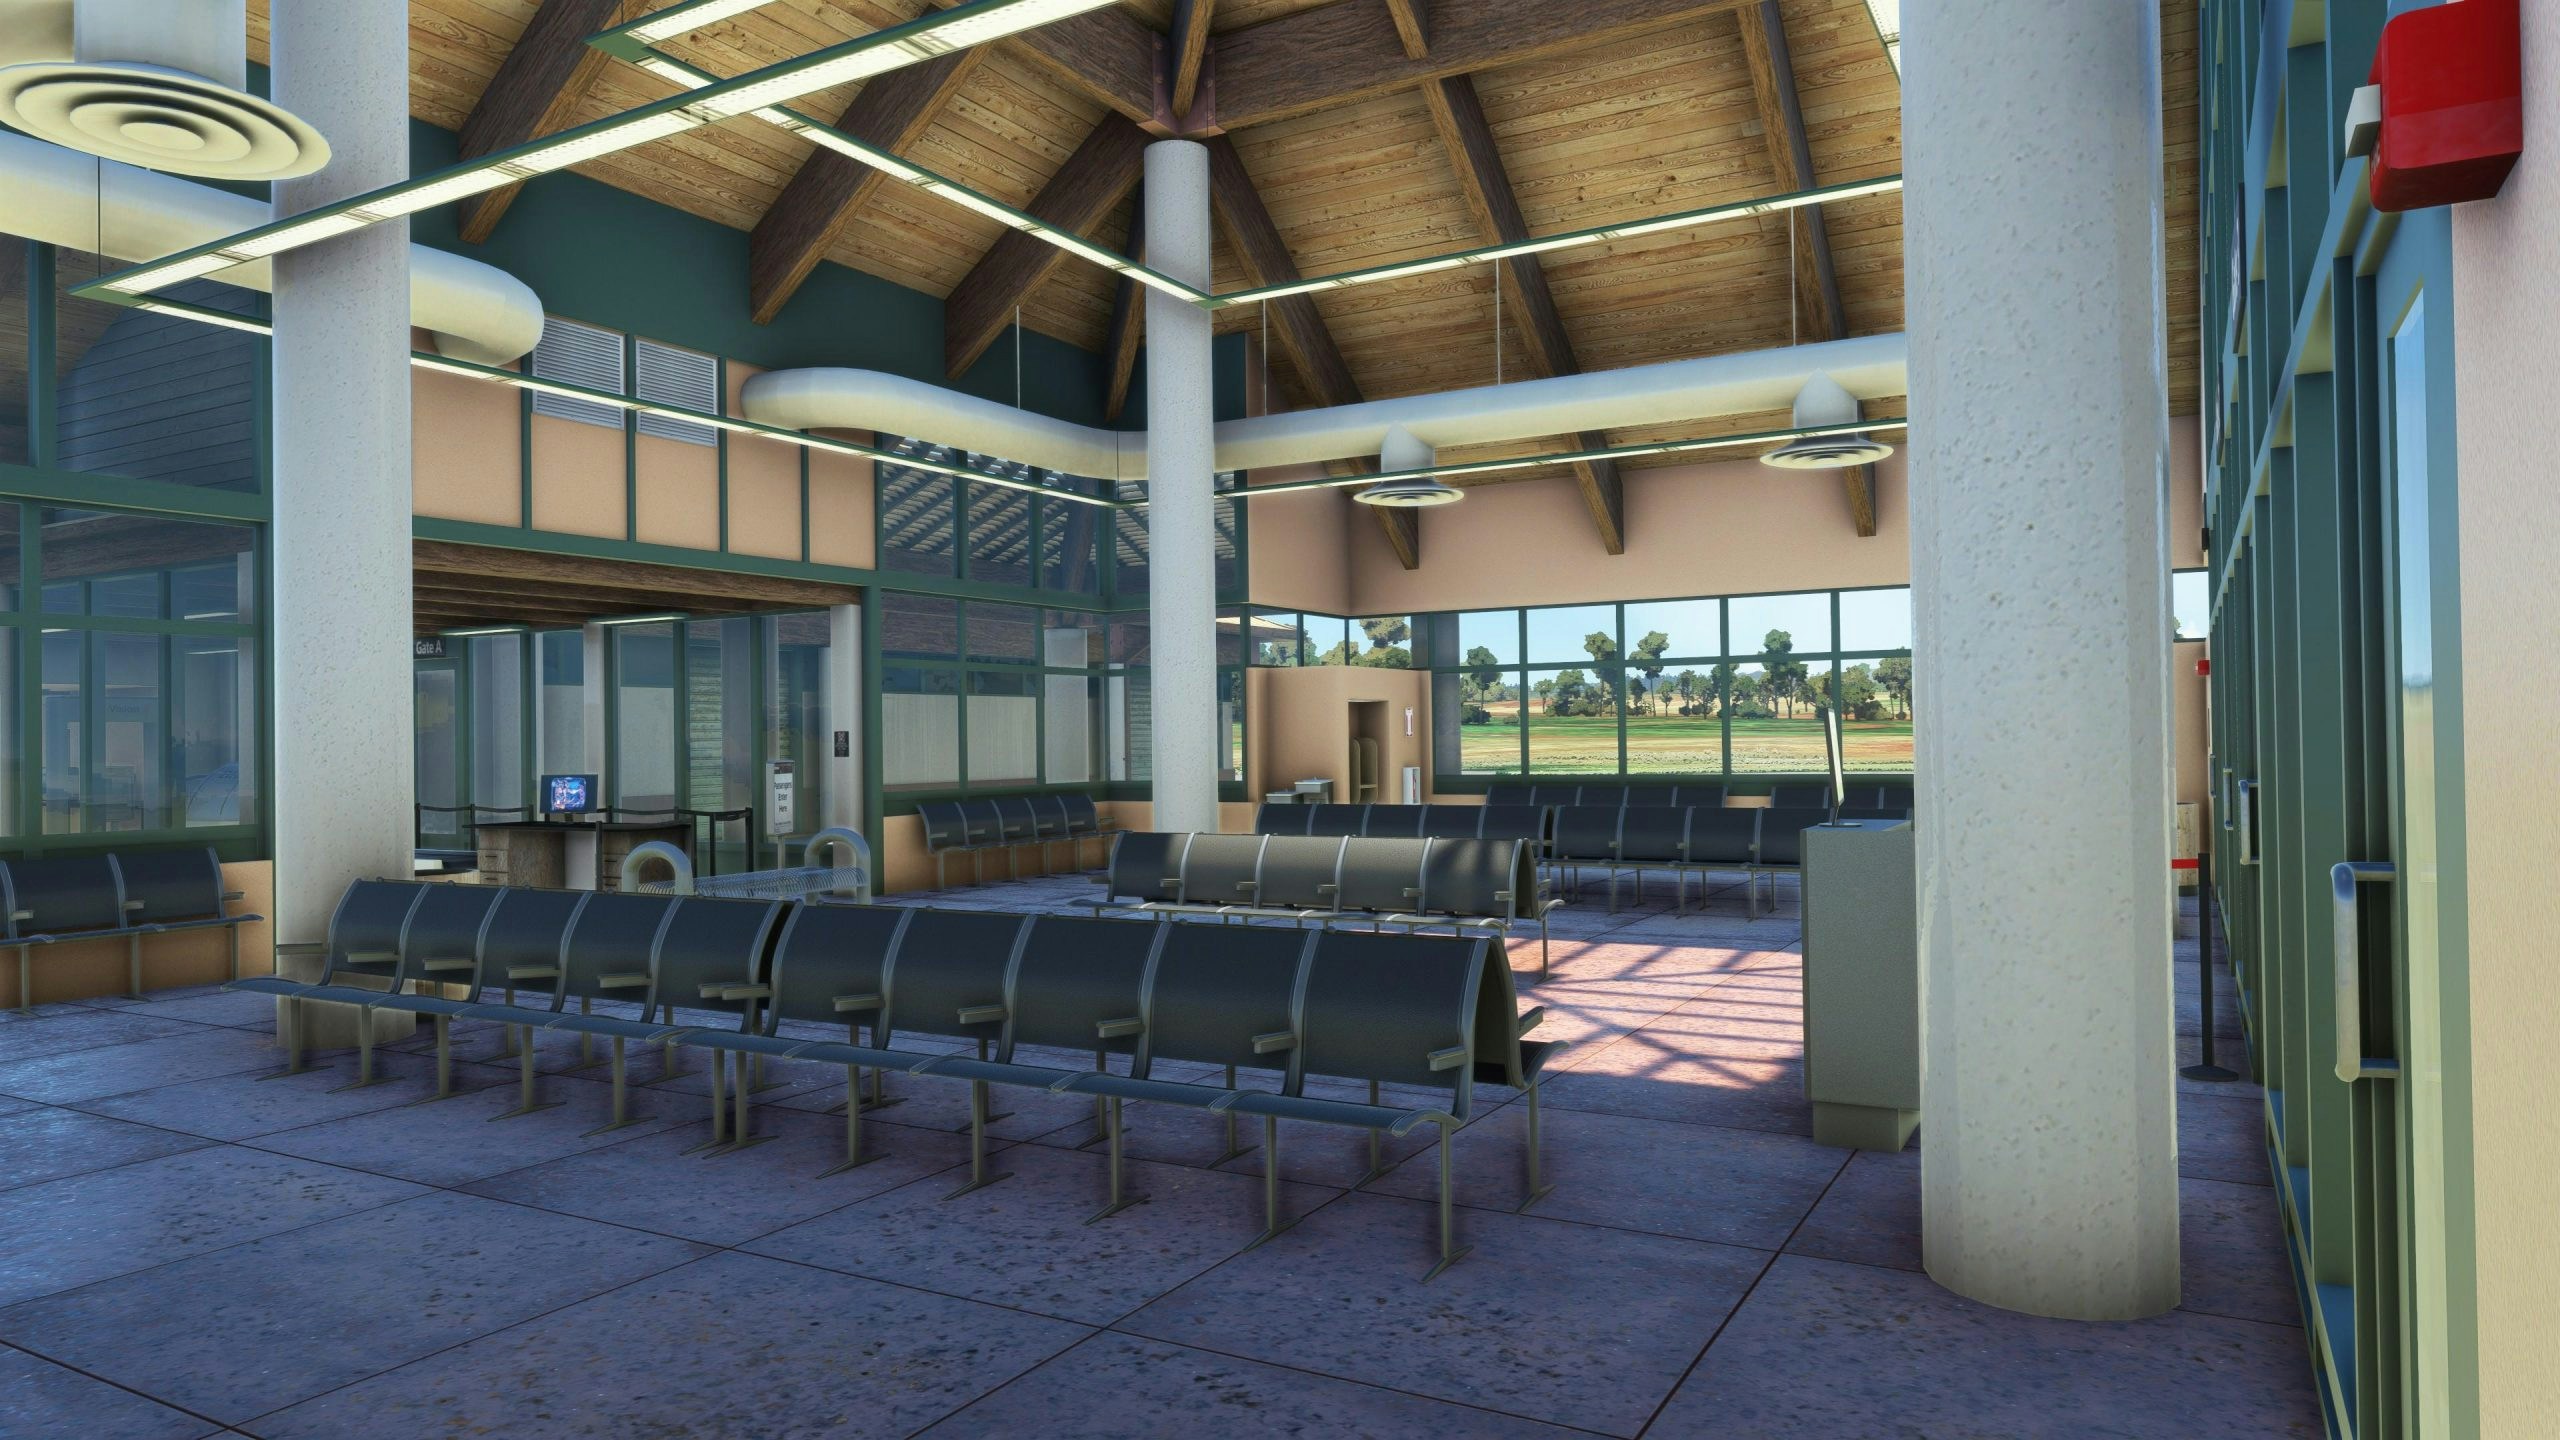 Northern Sky Studio Announces Lanai Airport